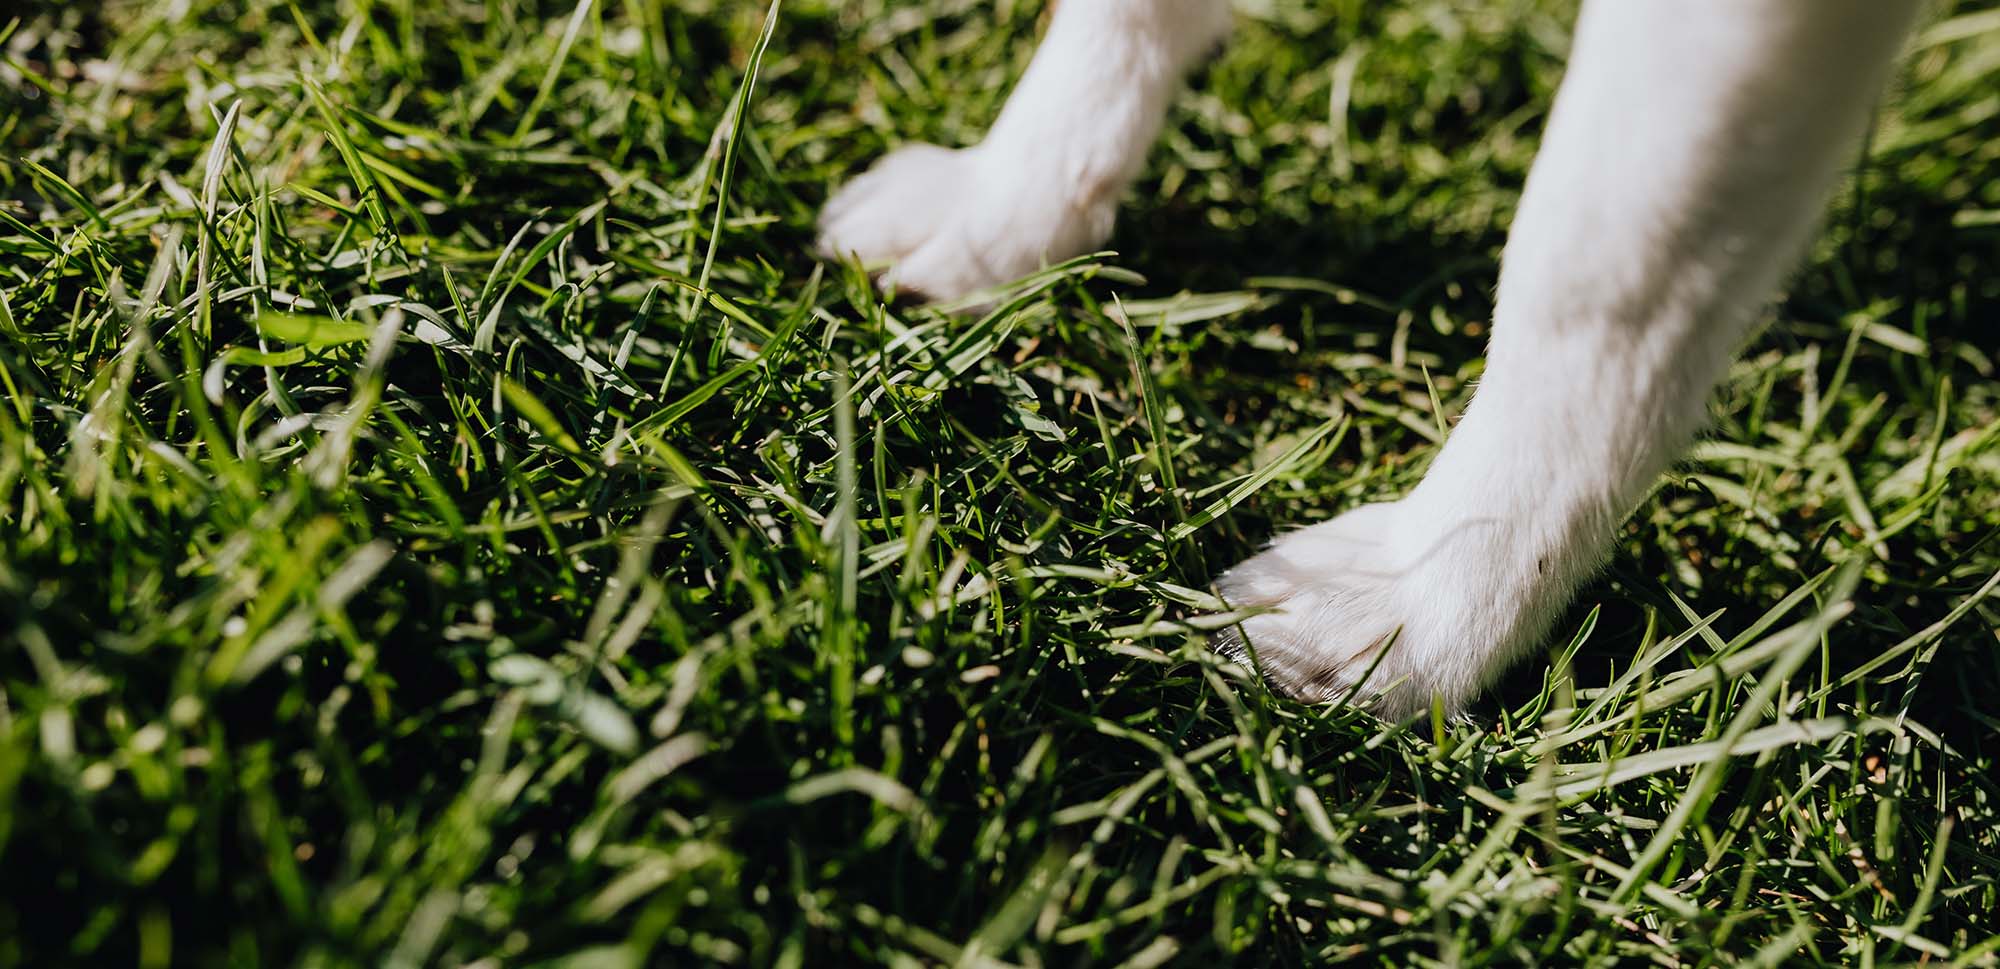 two 2 white dog paws on grass